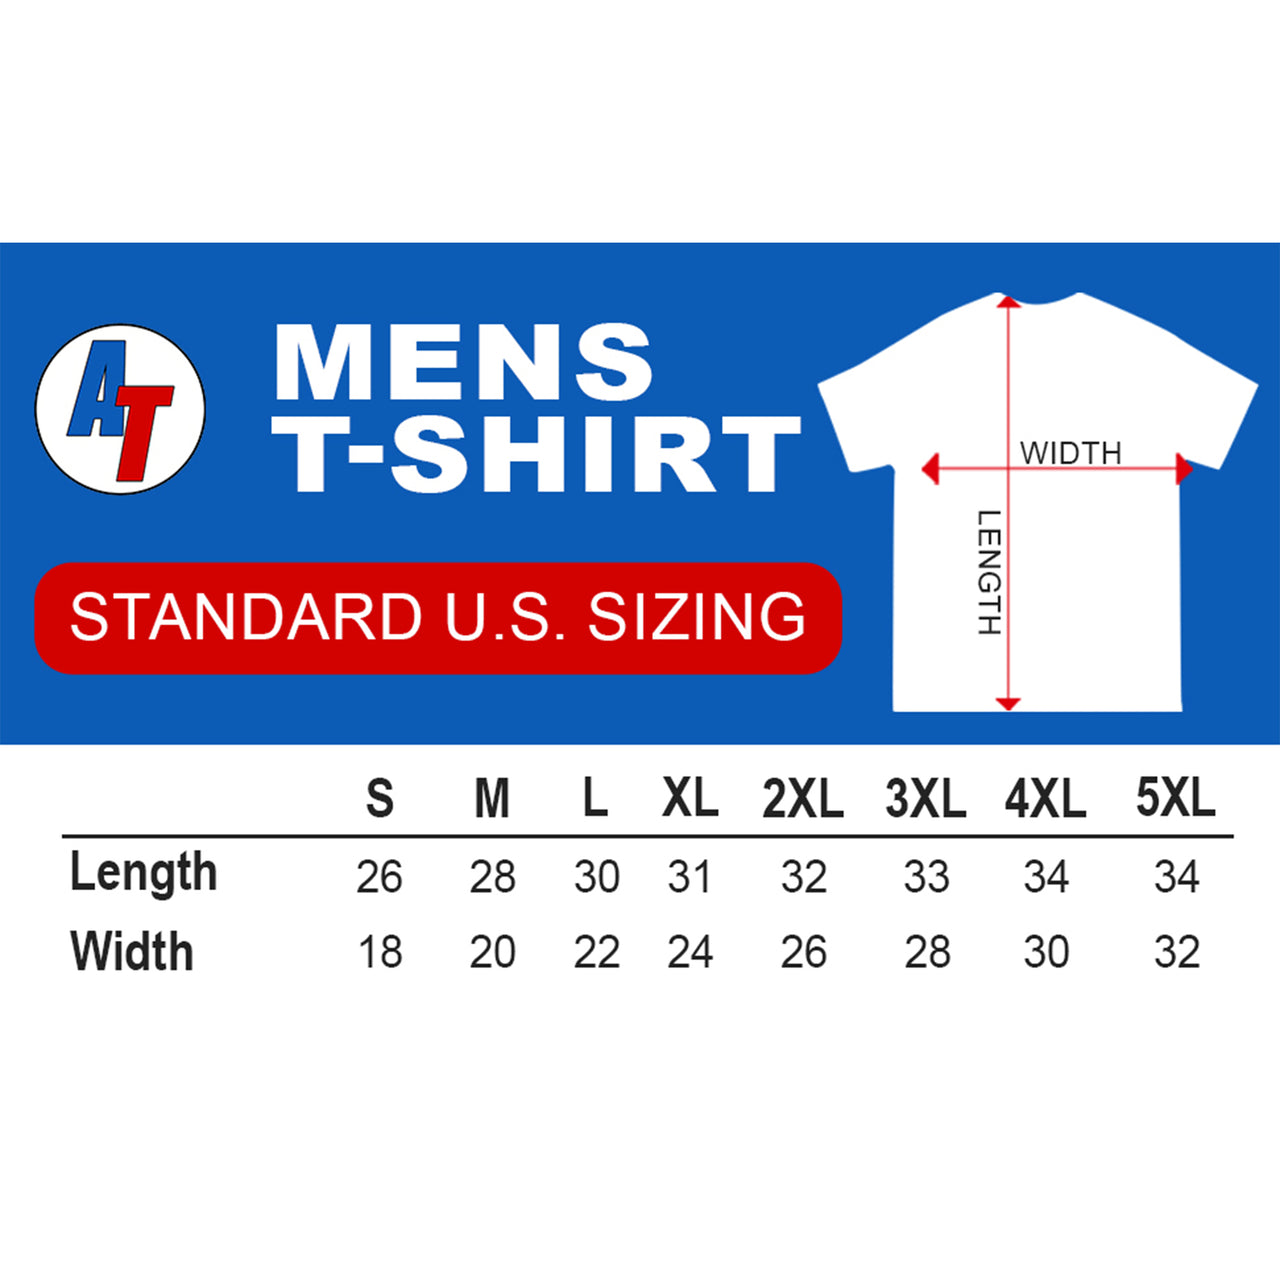 7.3 Power Stroke T-Shirt Size Matters